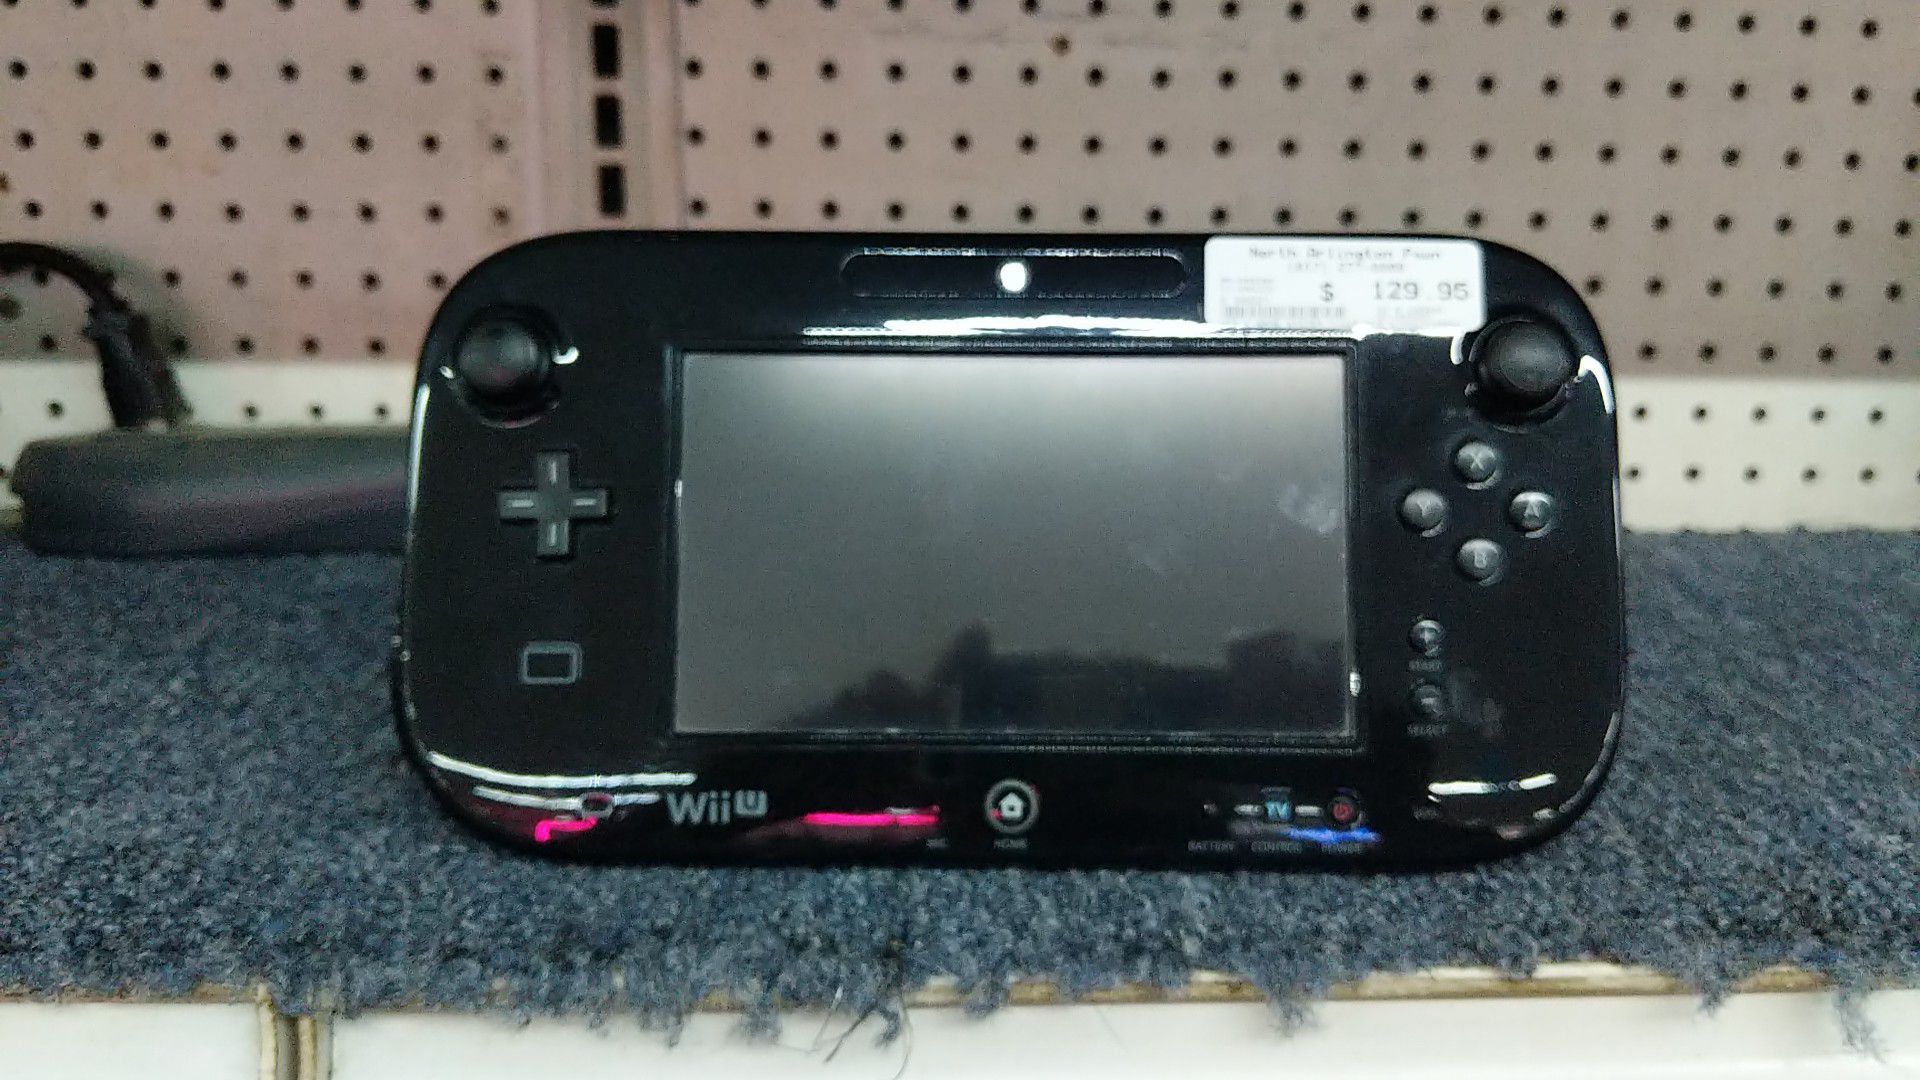 Nintendo Wii u with gamepad